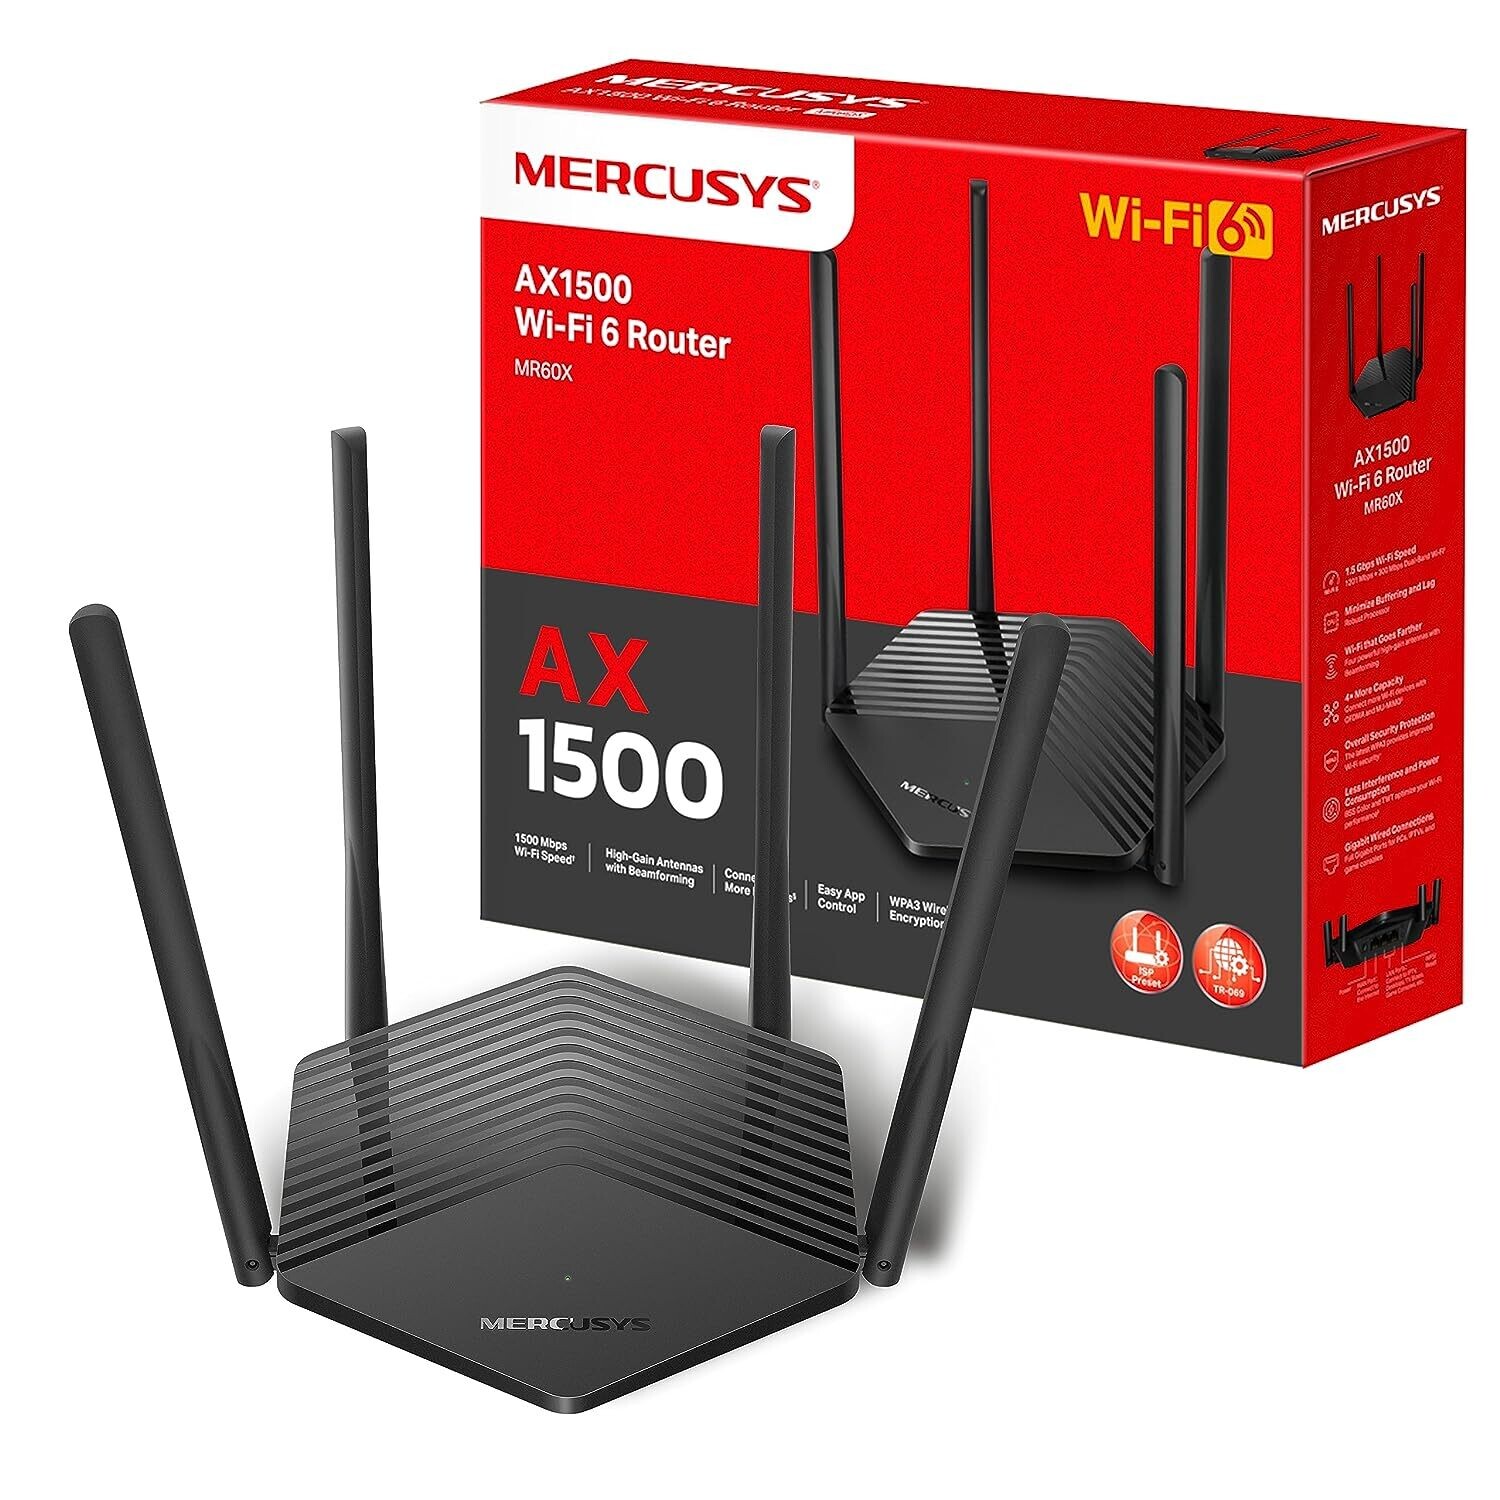 Mercusys MR60X AX1500 WiFi 6 Router